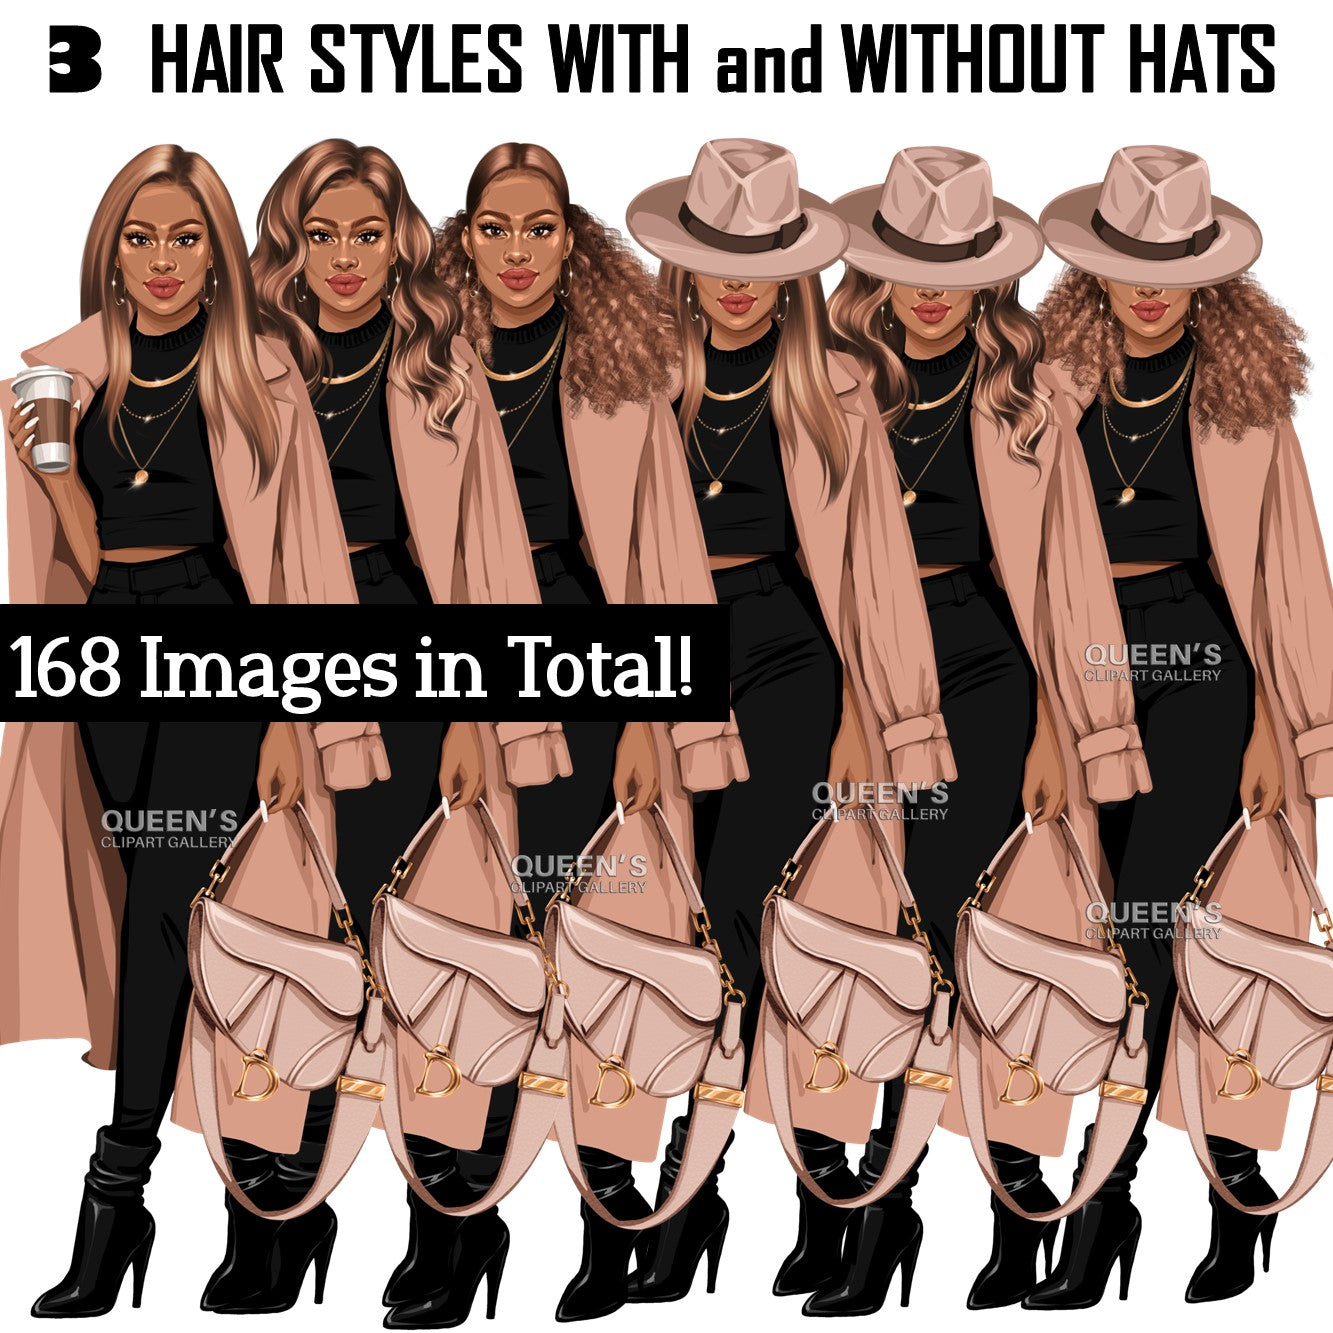 Fashion girl clipart, Black woman clipart, African American clipart, Fashion clipart, Girl boss clipart, Curvy girl, Woman in hat